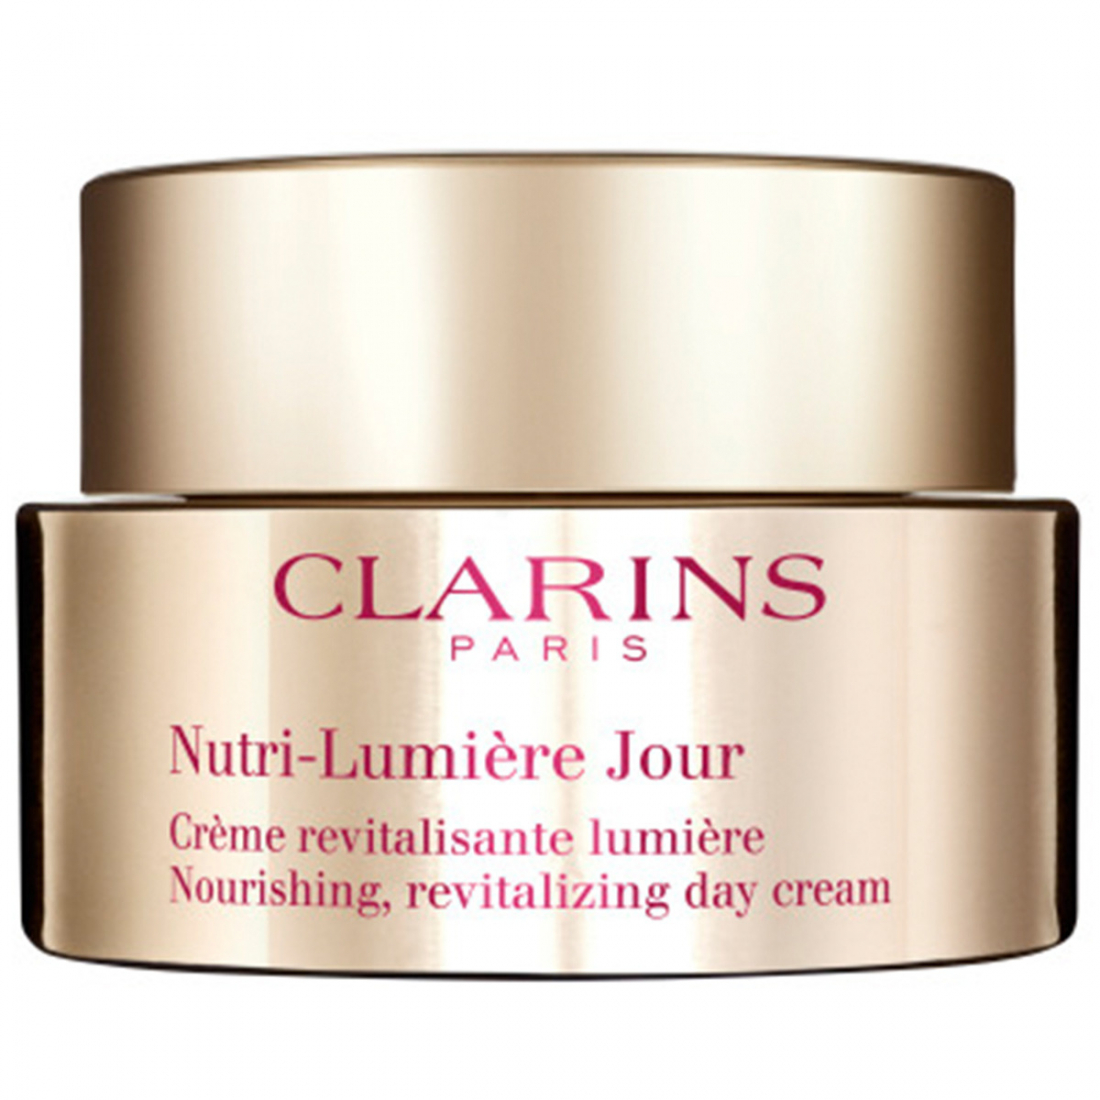 'Nutri-Lumière' Day Cream - 50 ml